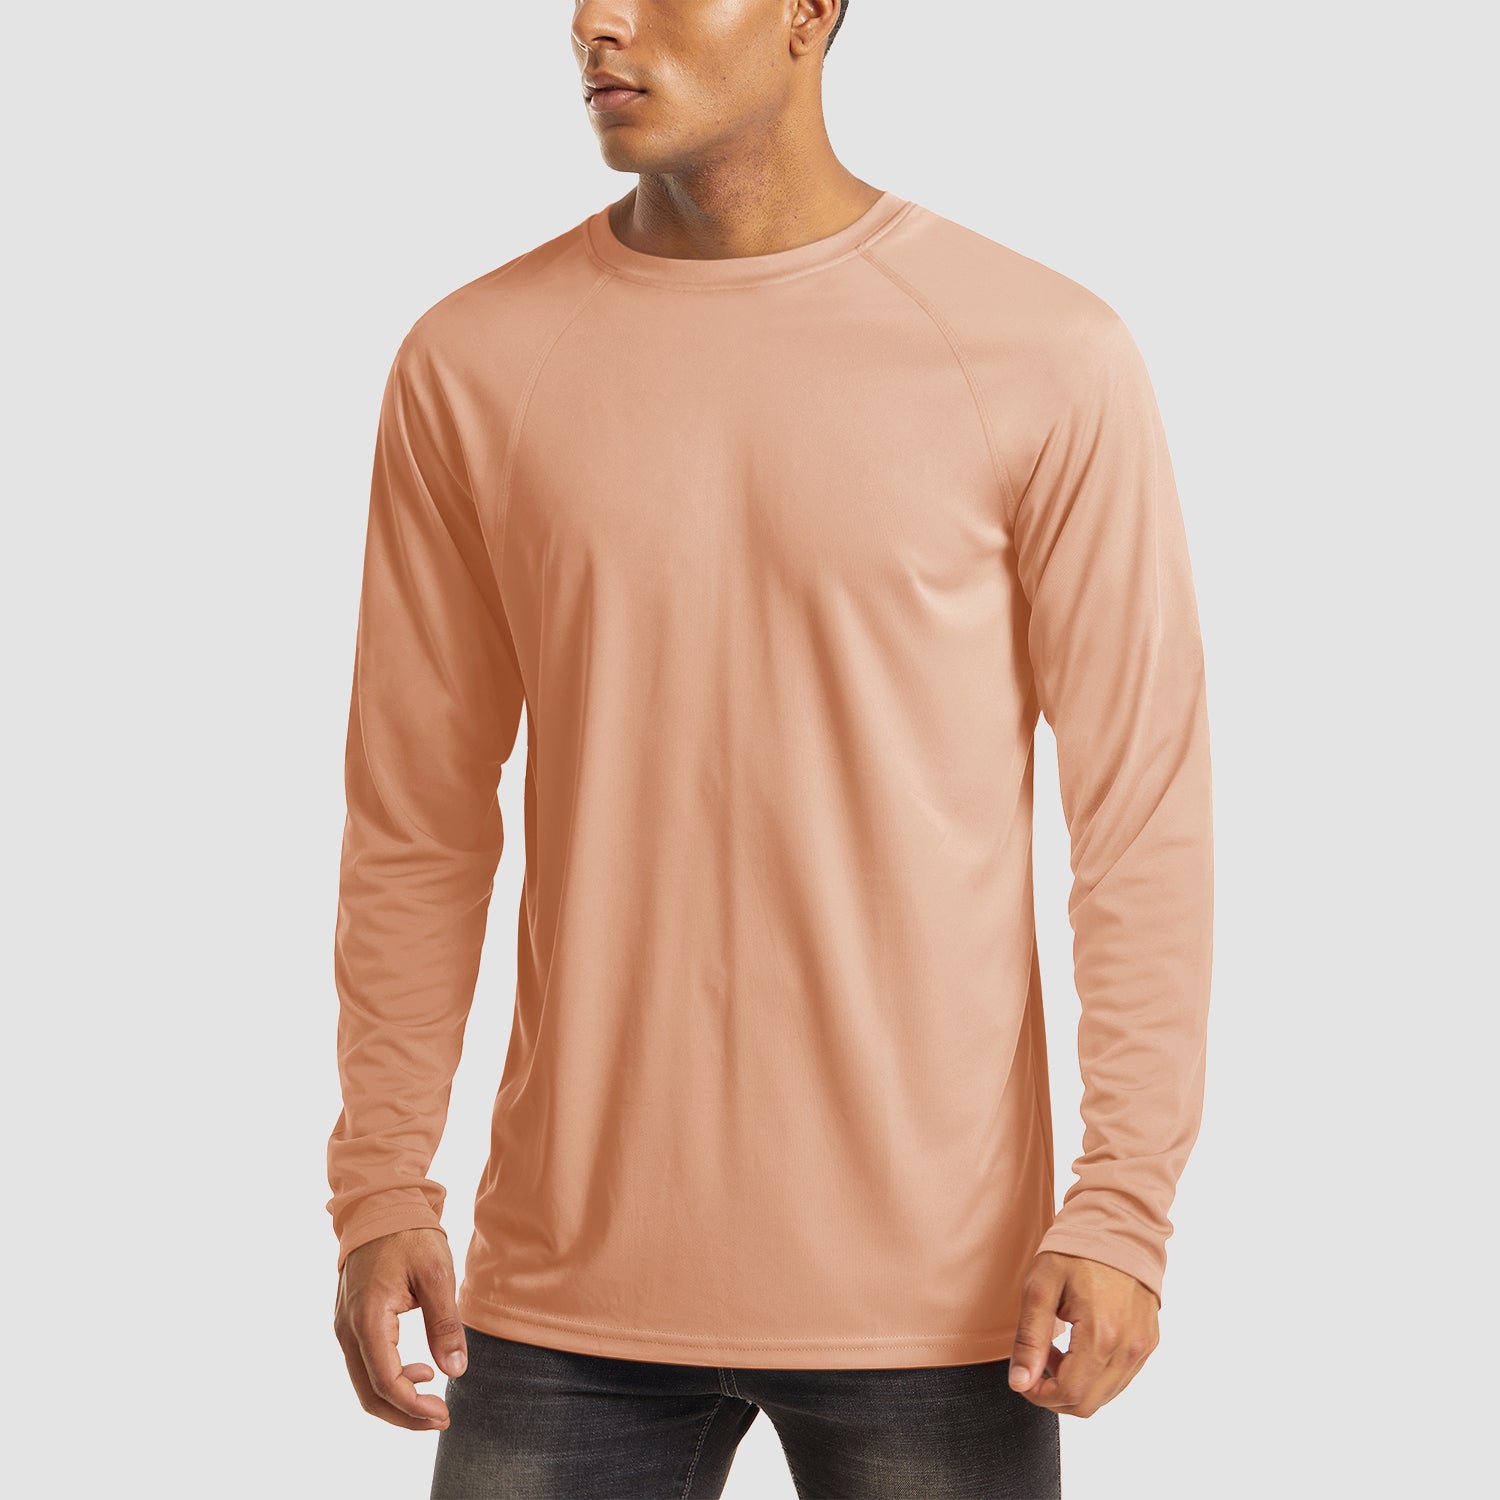 【Buy 4 Get 4th Free】Men's Long Sleeve Hooded Shirt UPF 50+ Athletic Shirts, Wine / L